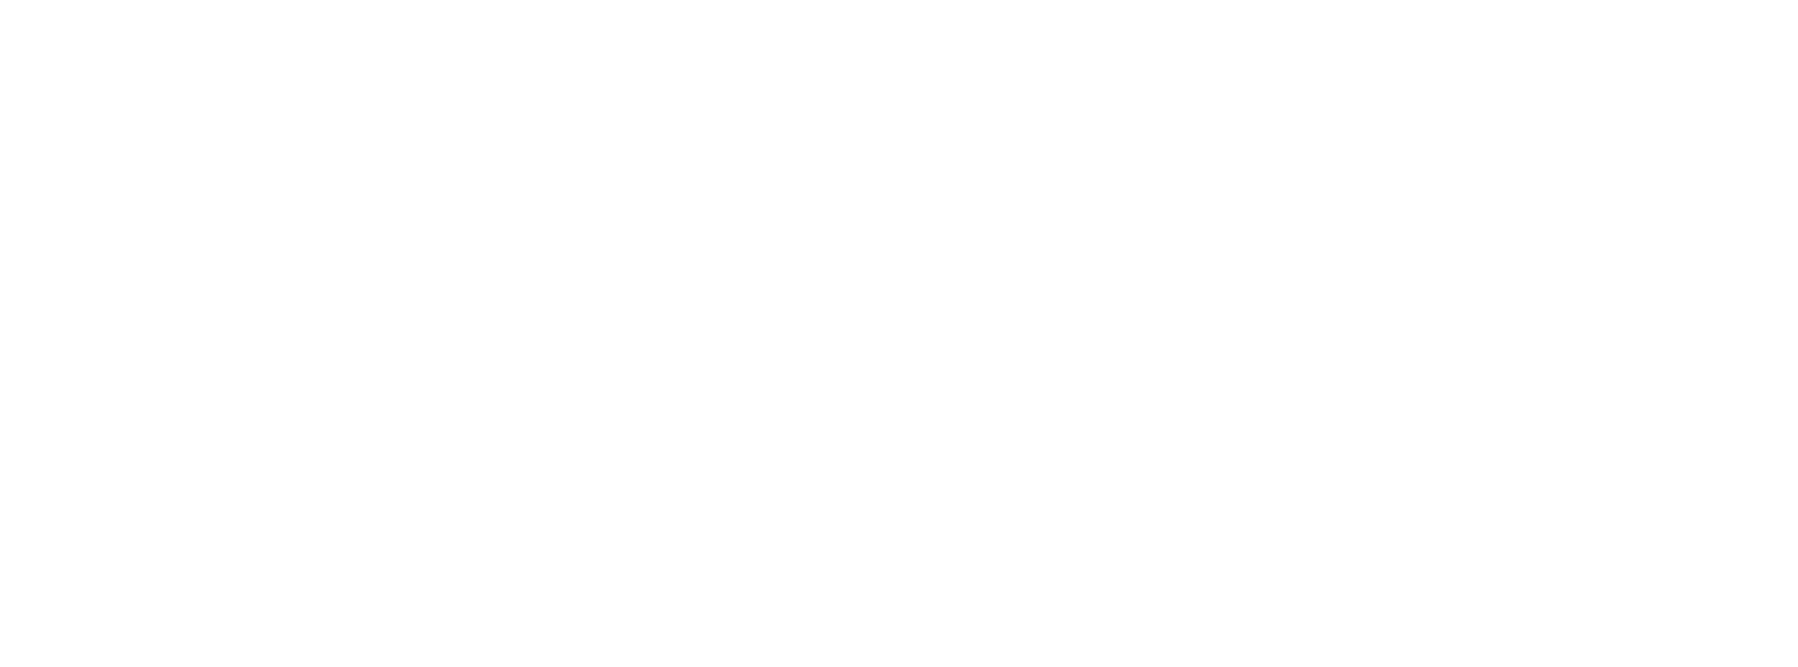 Sares by Kristin Sarstedt logo white png